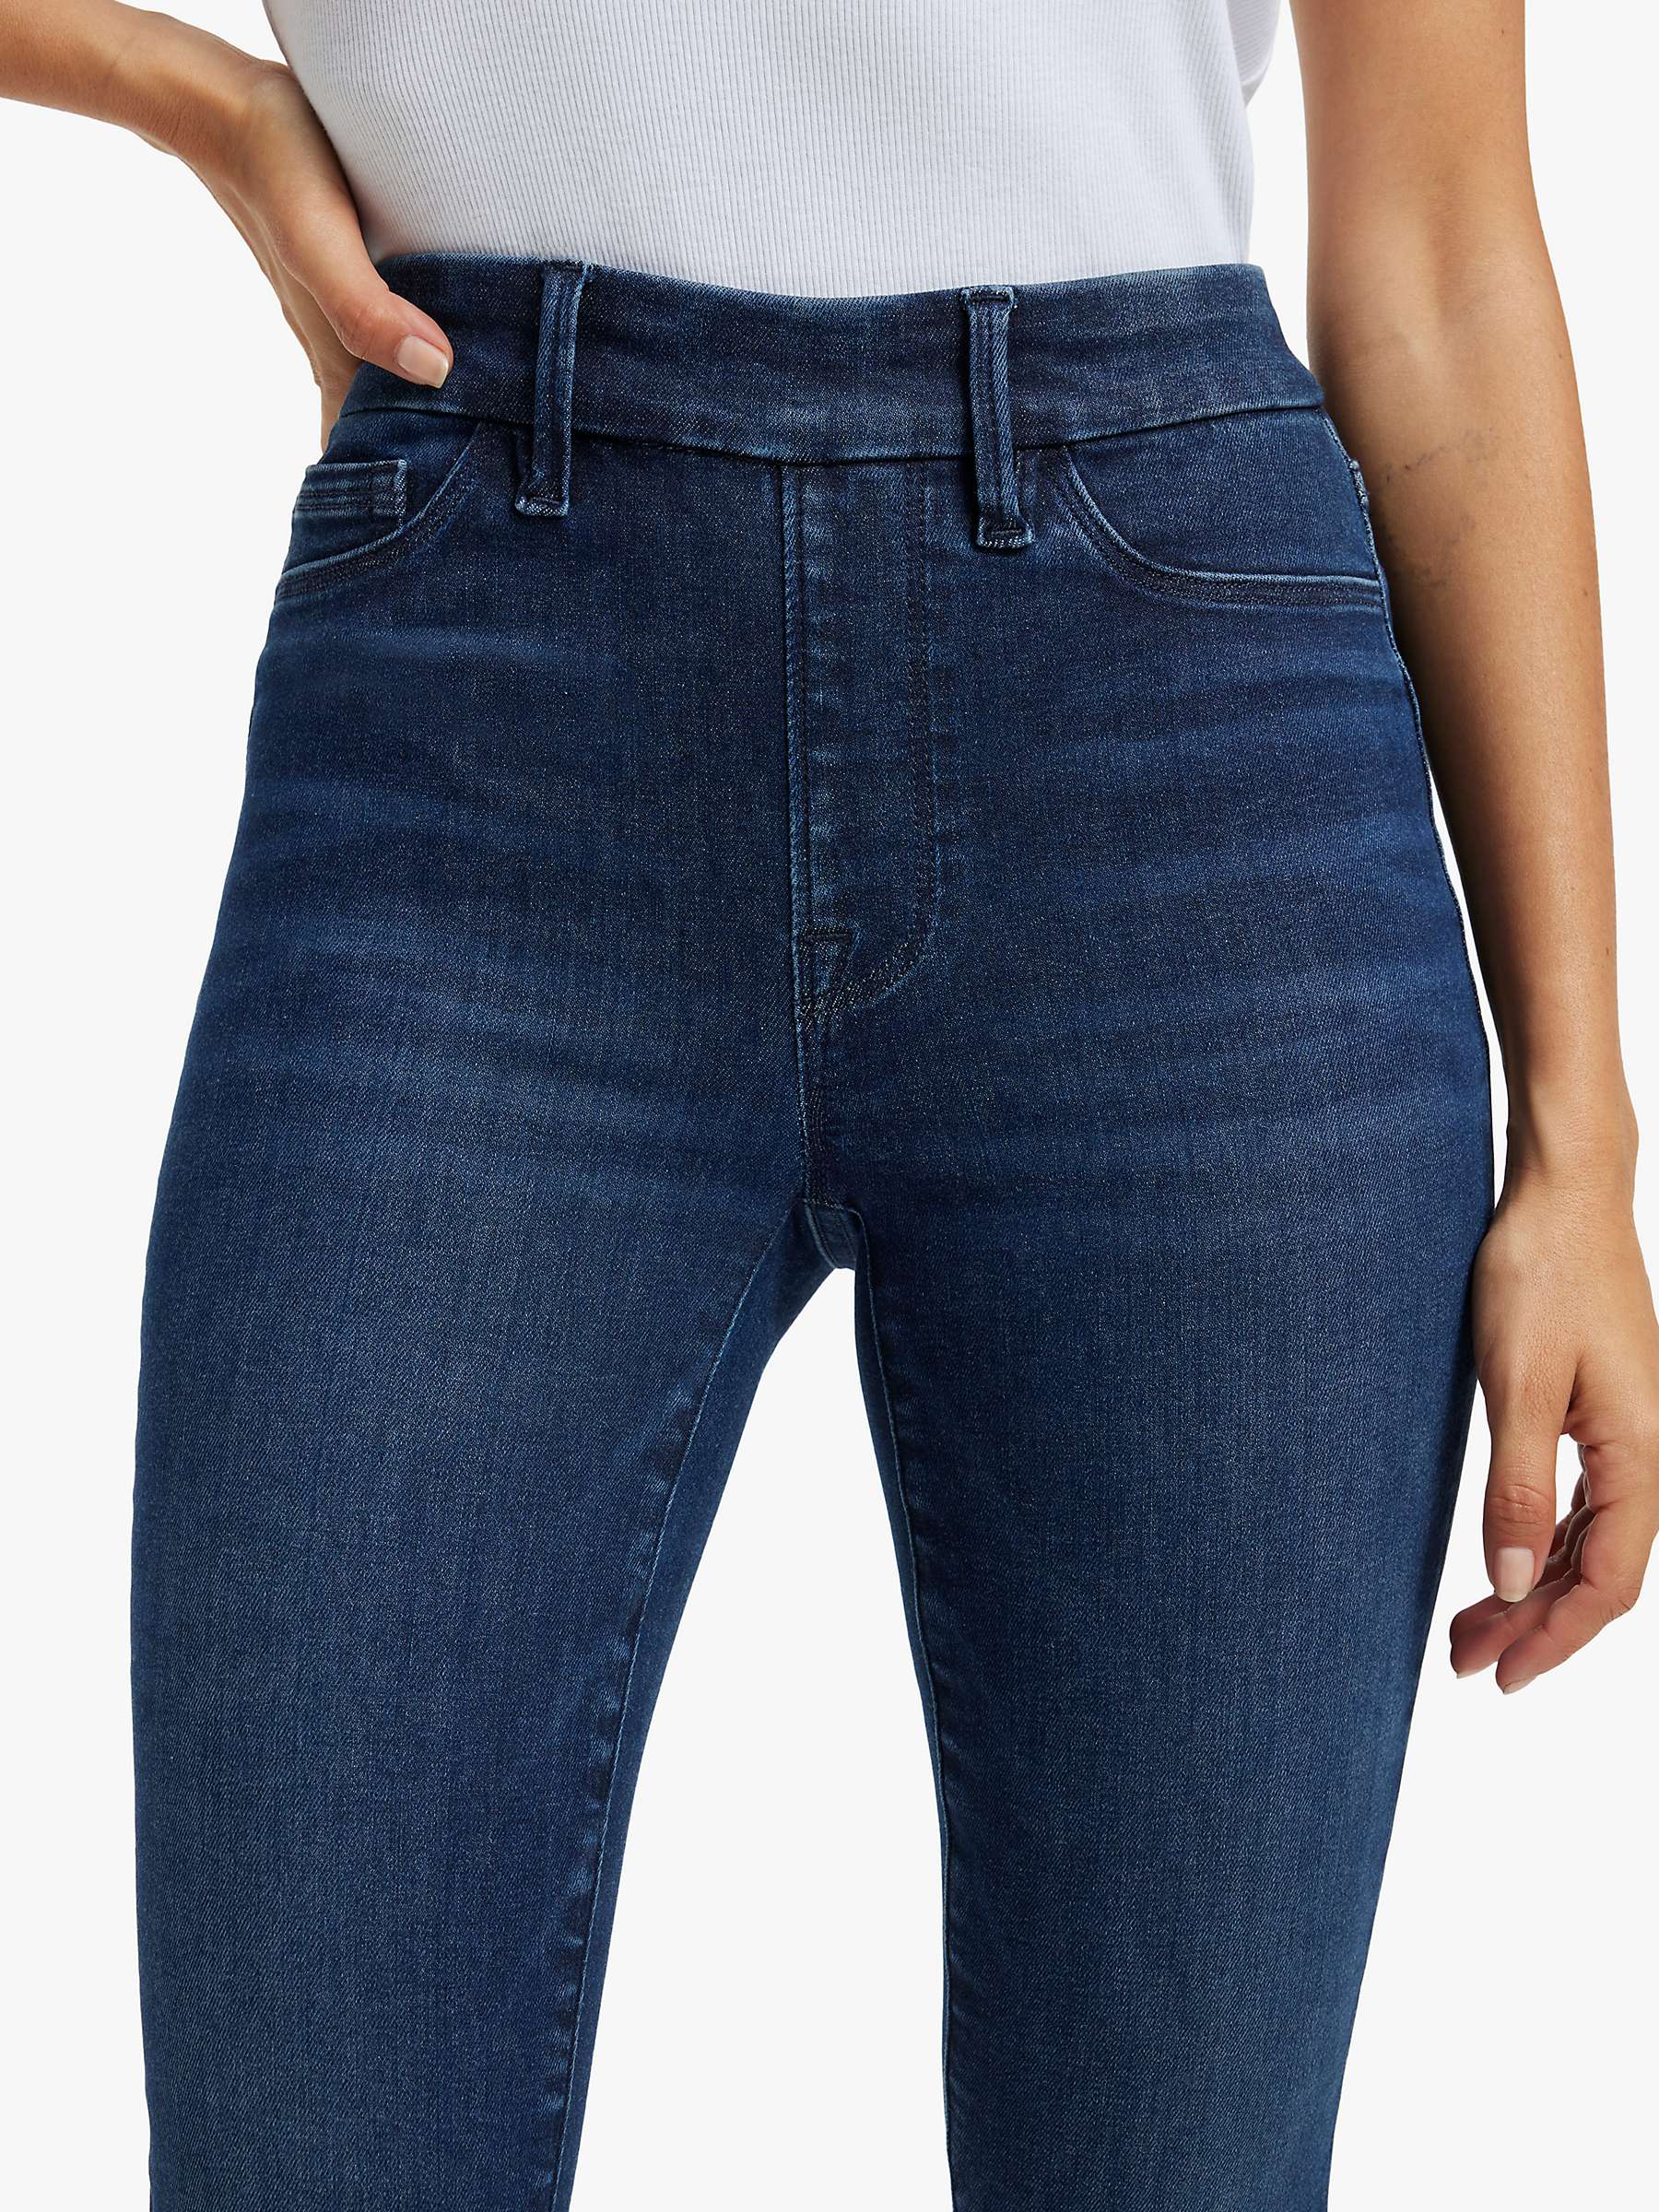 Buy Good American Pull On Skinny Jeans, Indigo Online at johnlewis.com